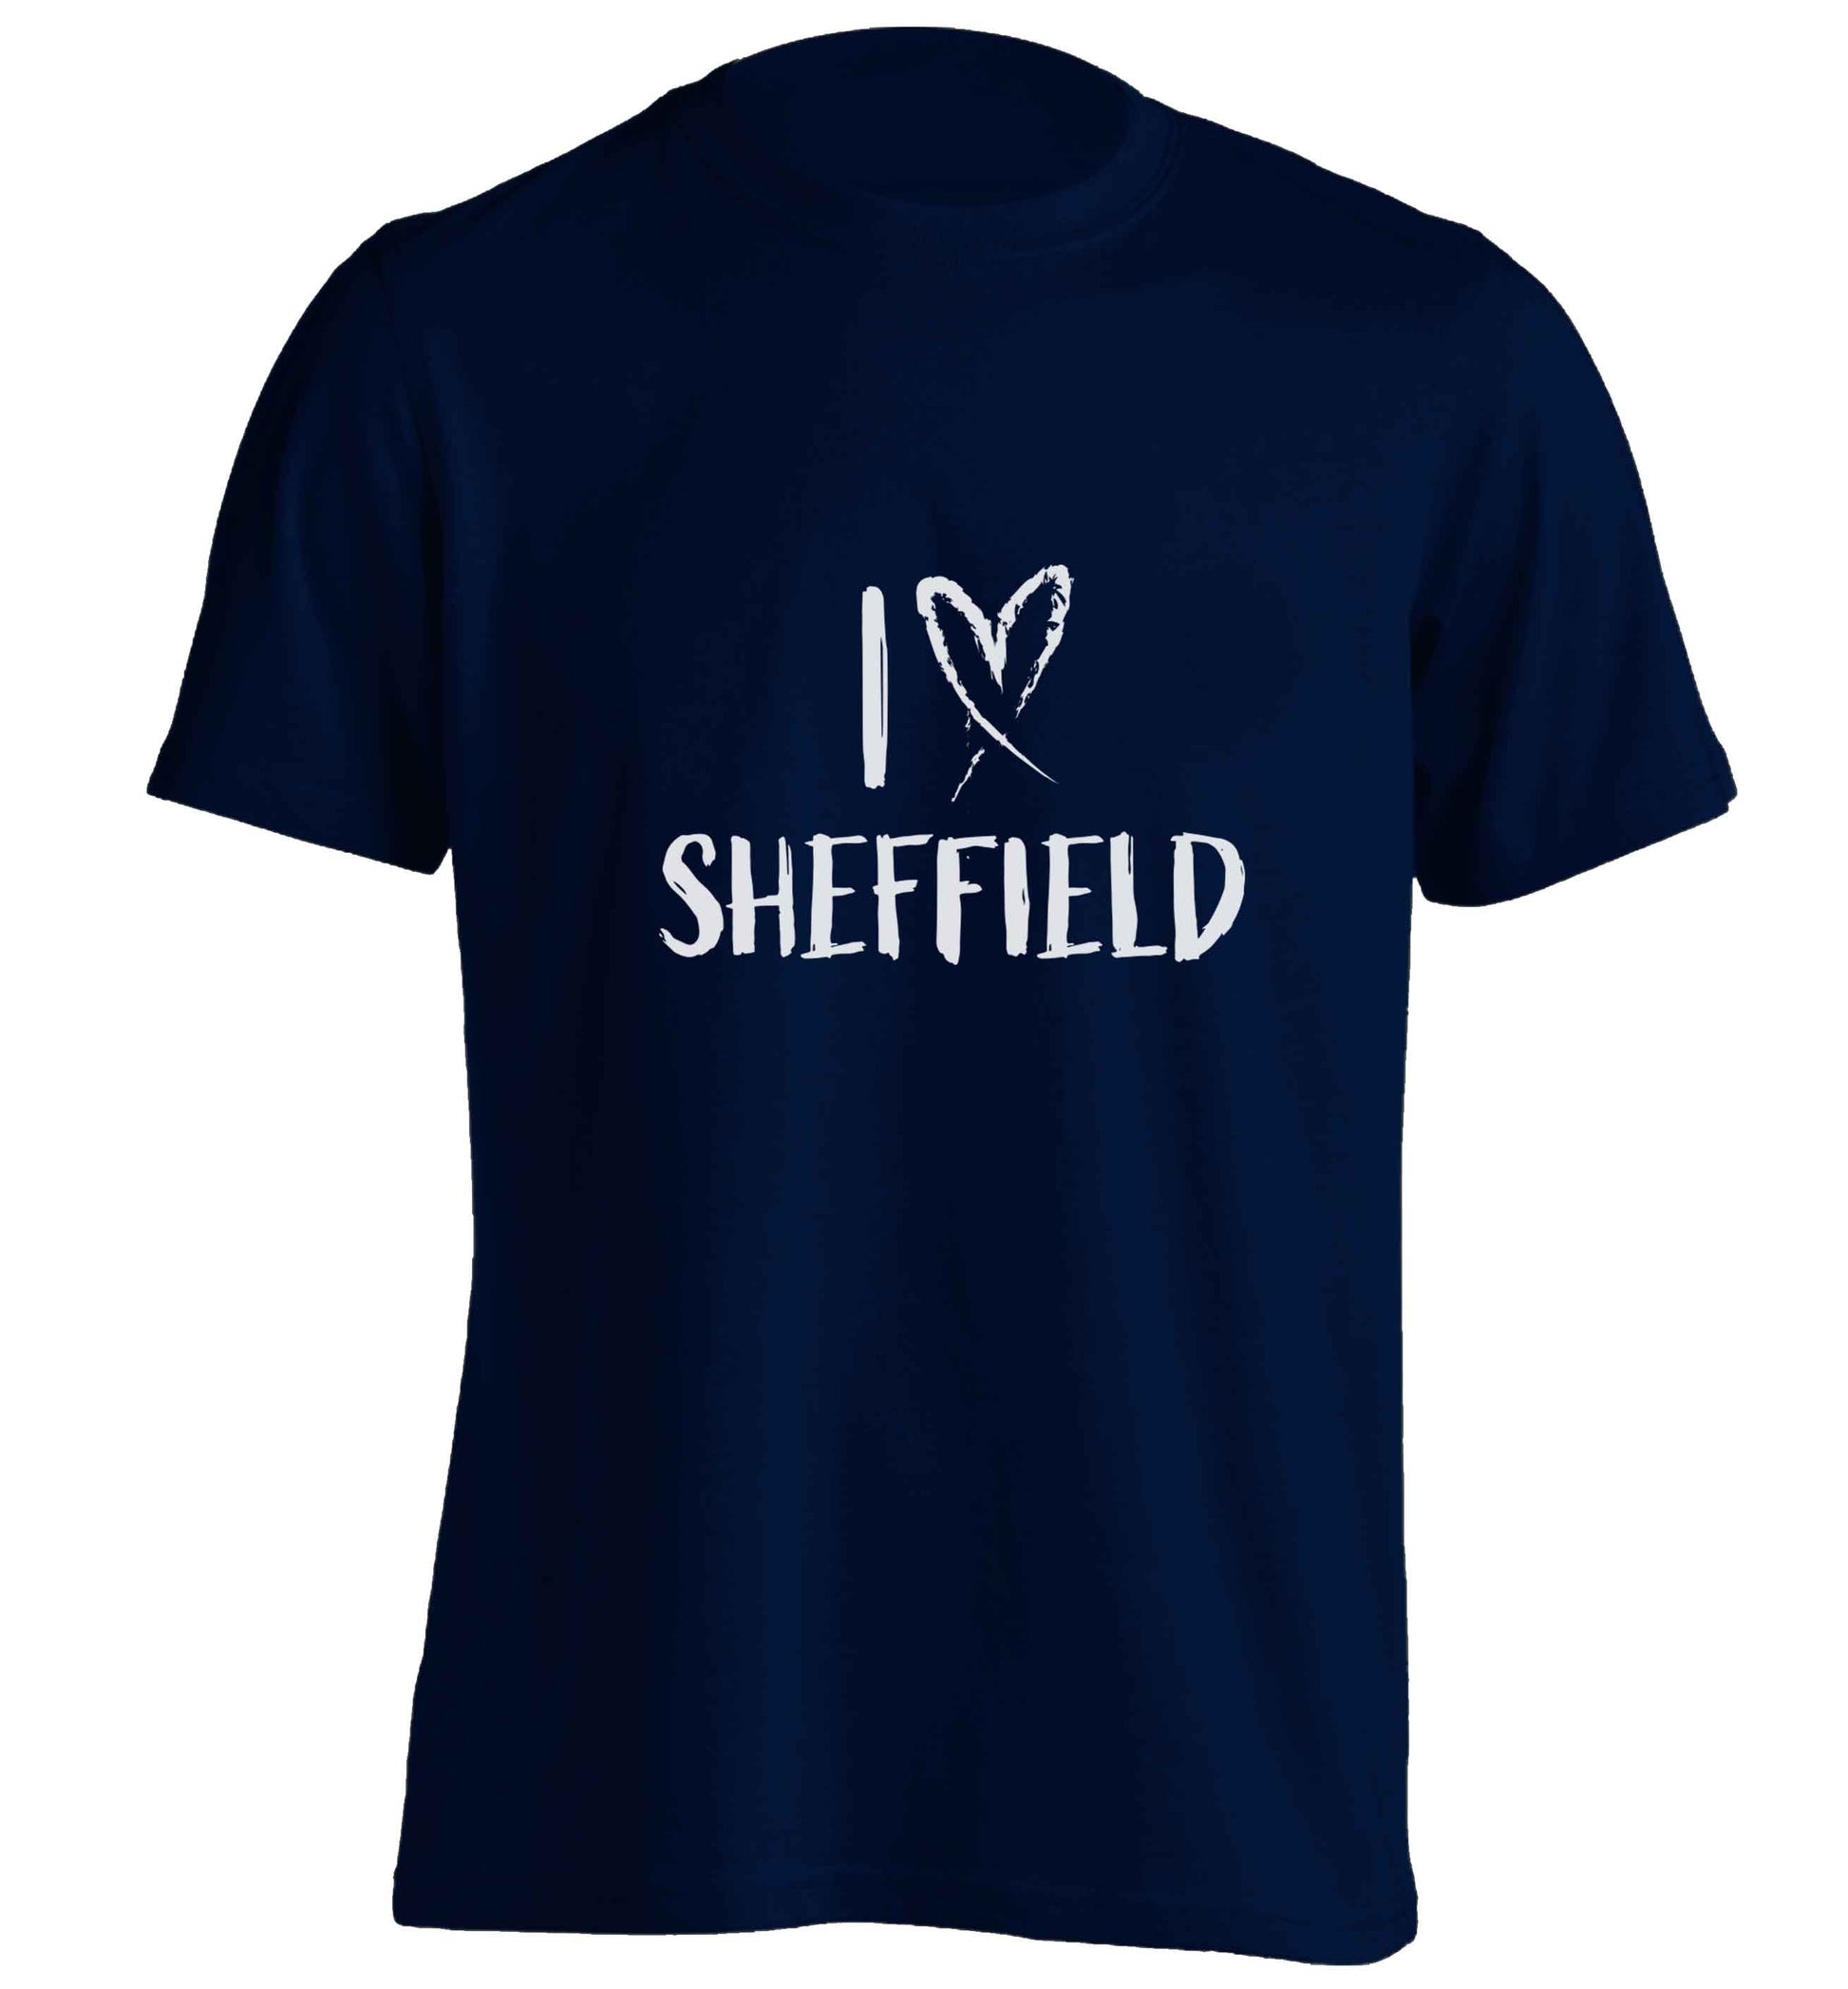 I love Sheffield adults unisex navy Tshirt 2XL